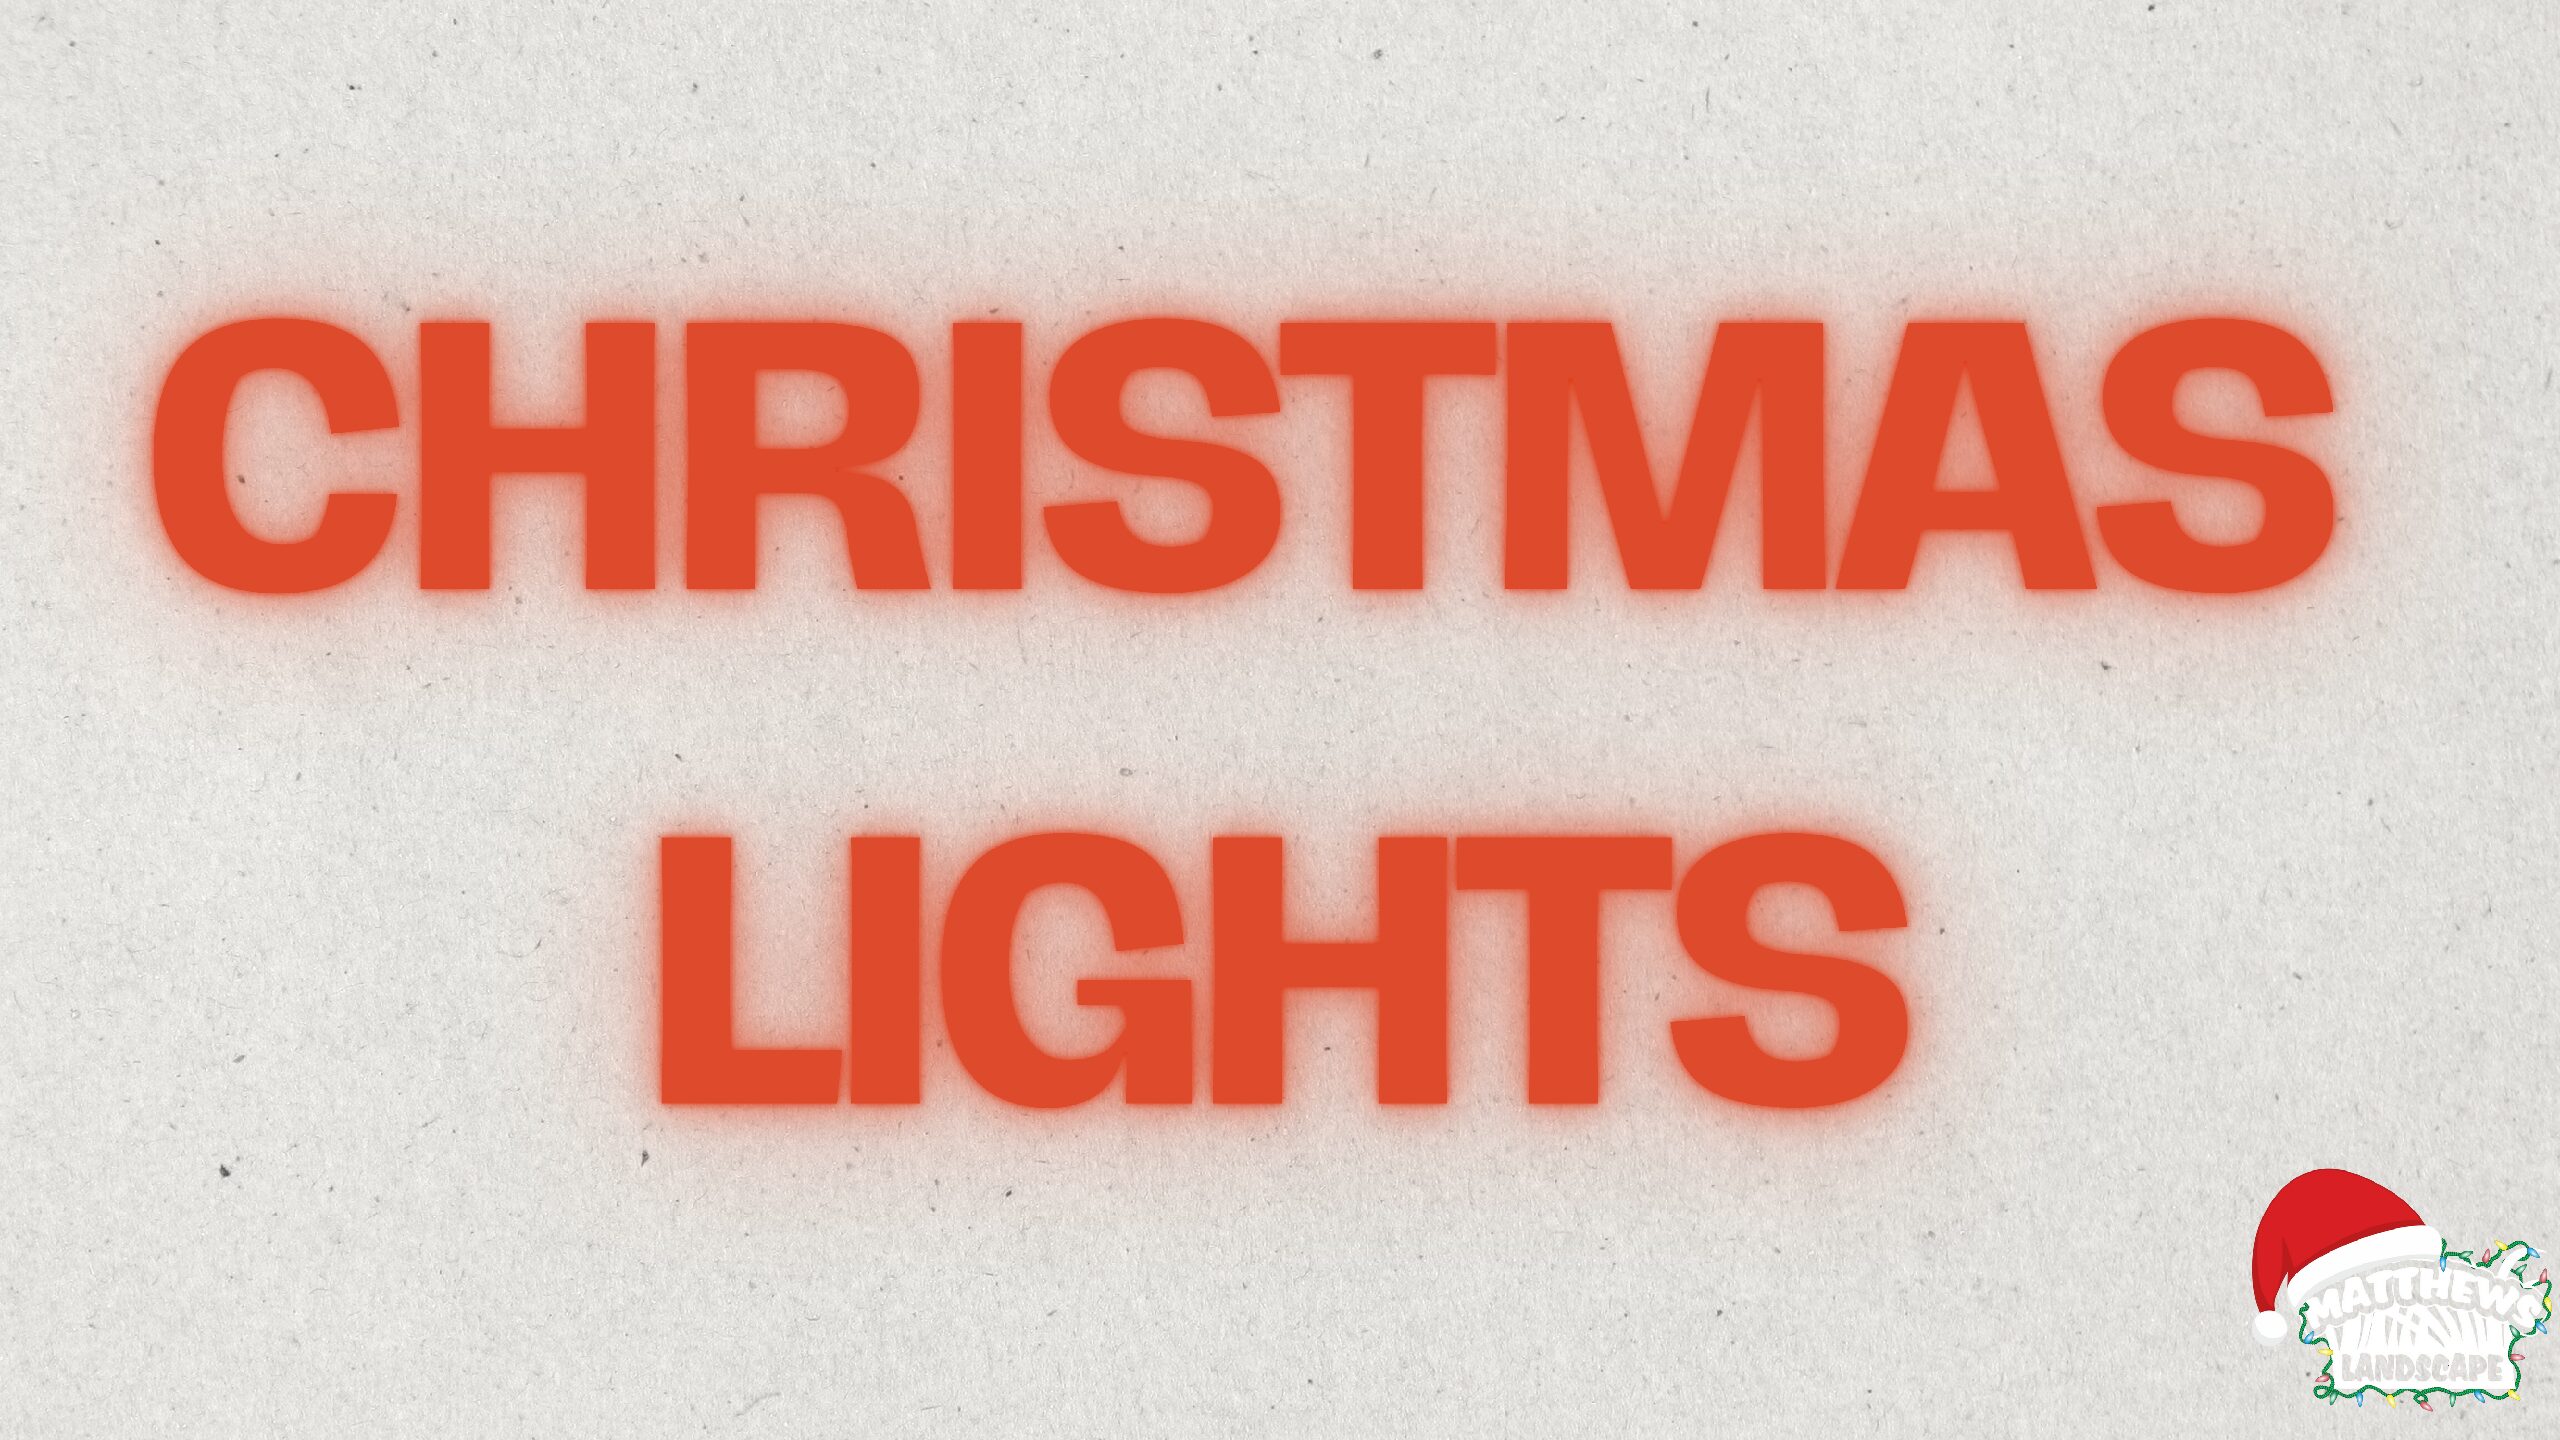 “Honey Look on the Television! It’s Matthews Christmas Lights!”